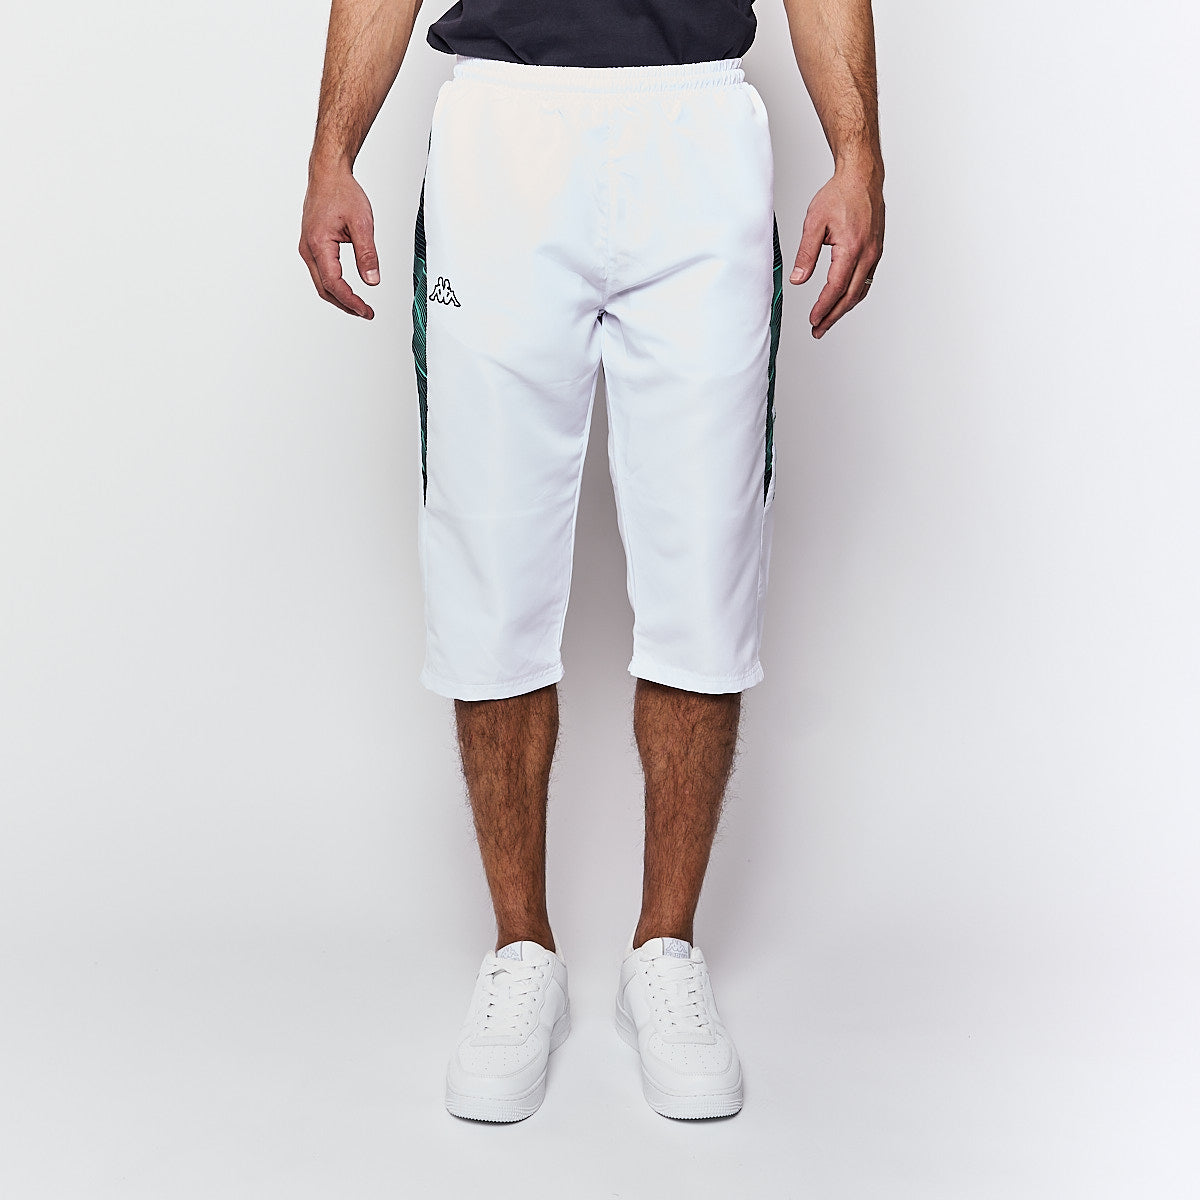 Pantalon homme Ehors Sportswear Blanc